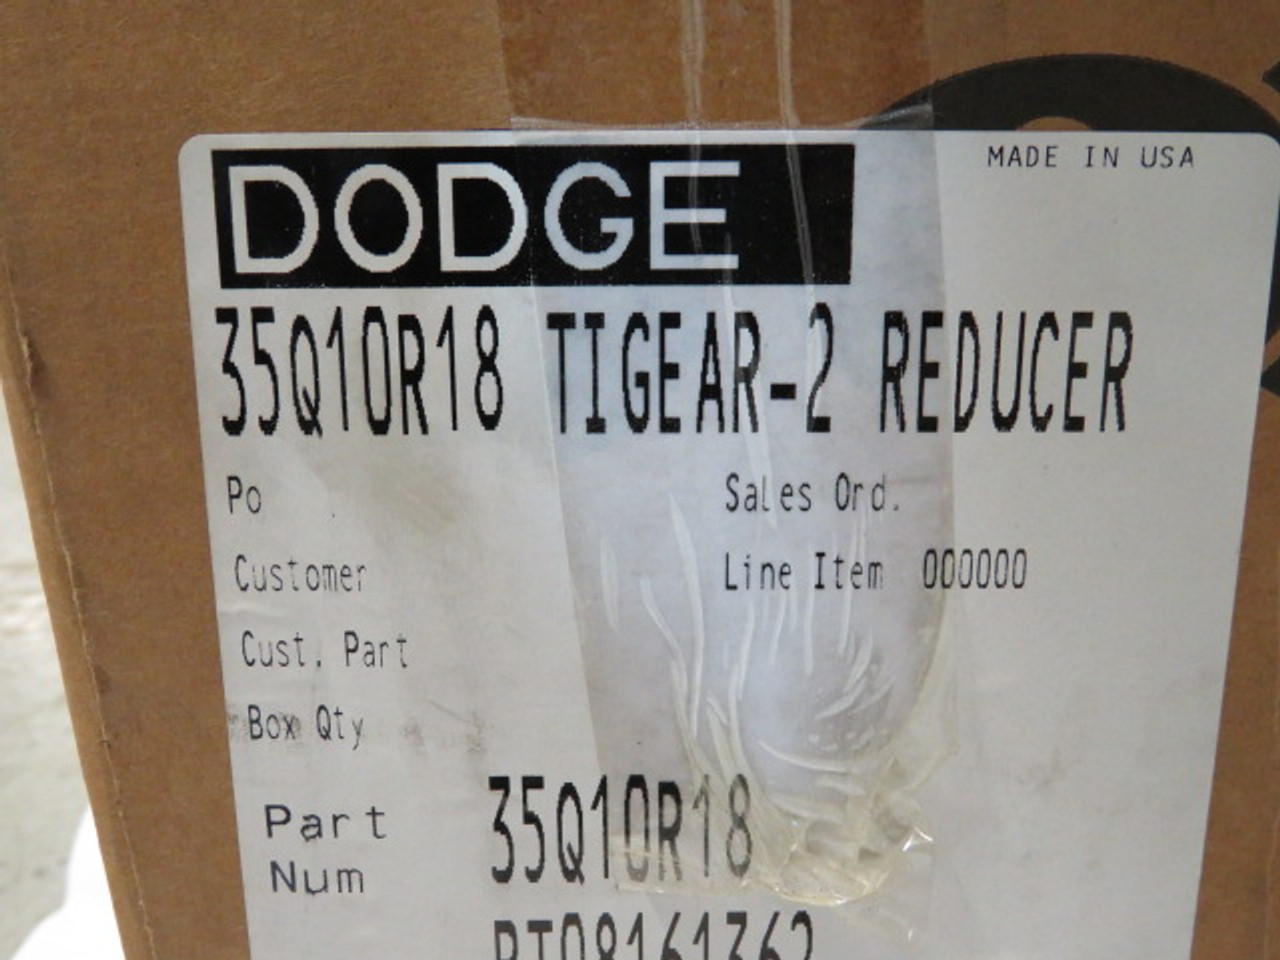 Dodge 35Q10R18 Tigear 2 Reducer 10:1 Ratio 3310lb-in 10HP@175RPM ! NEW !